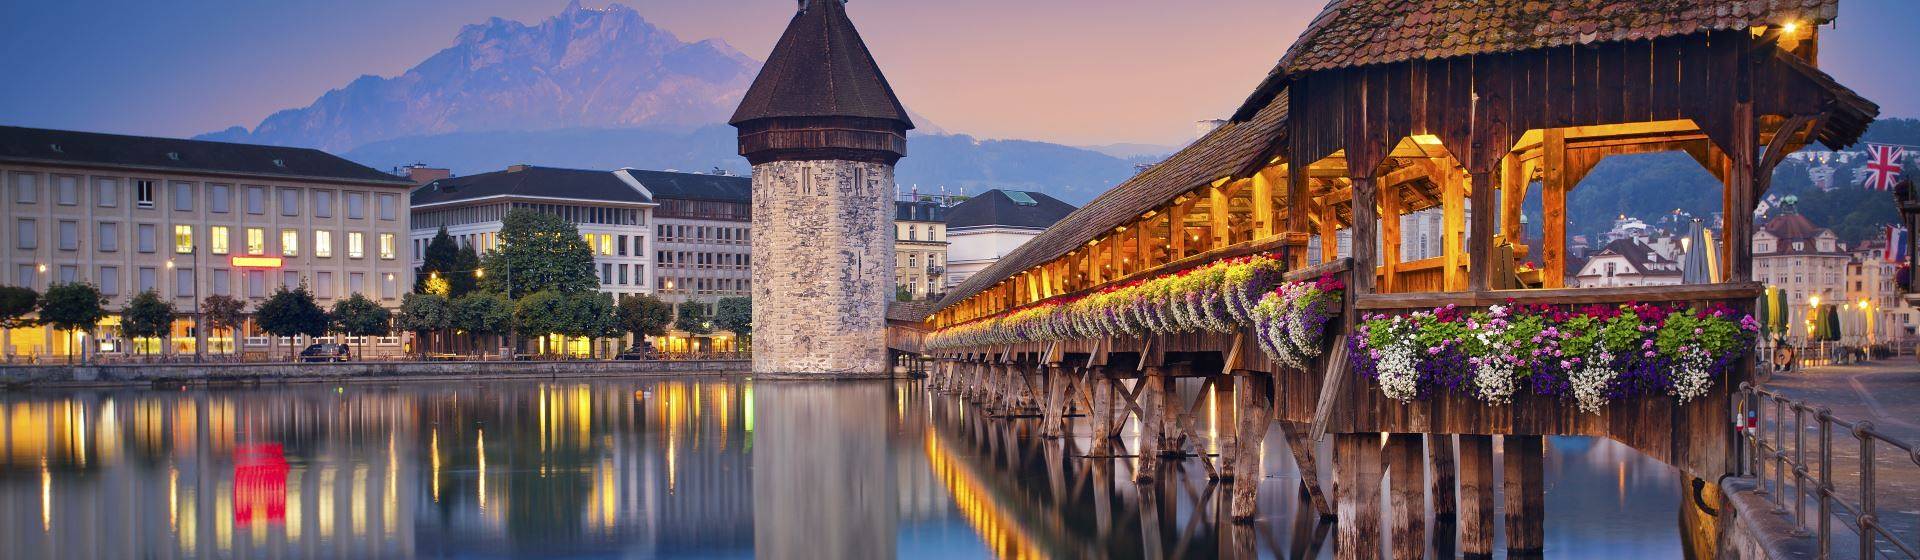 Holidays to Lucerne Image